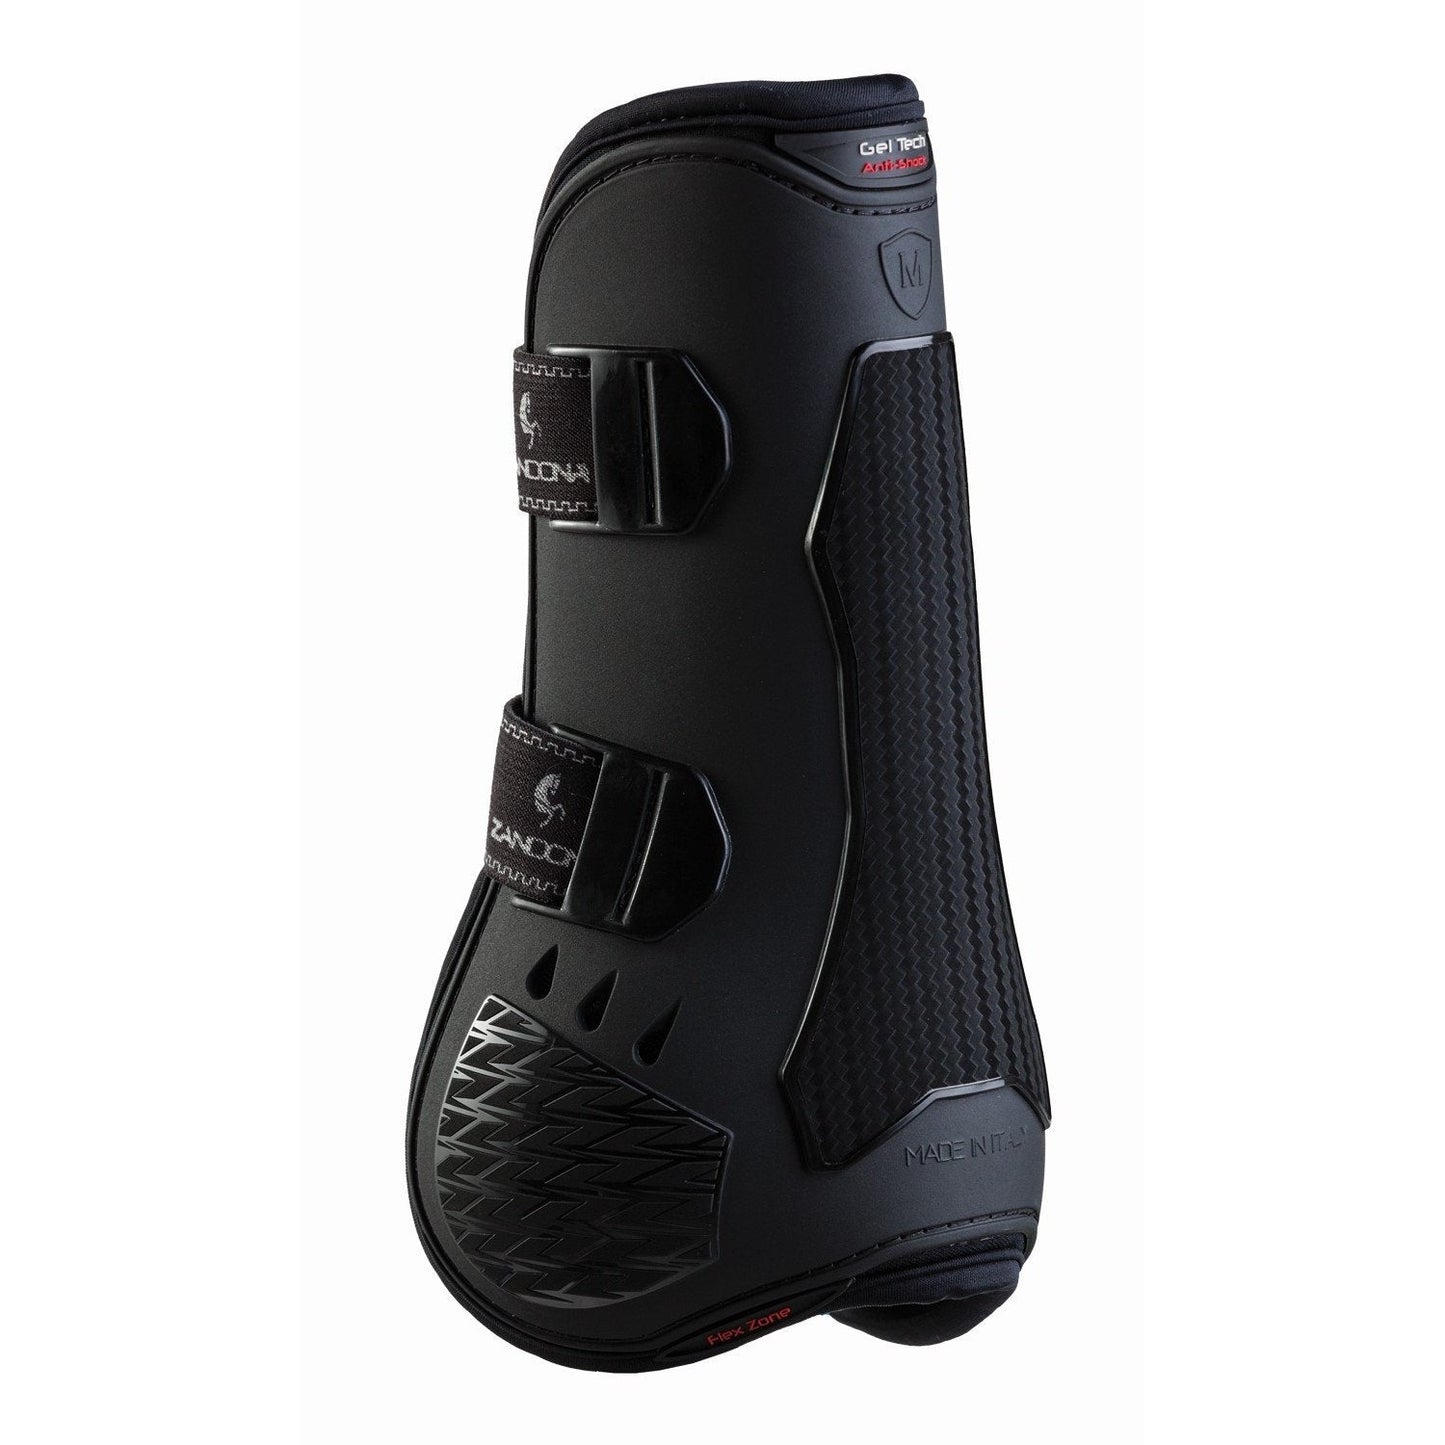 Zandona horse boots, black, protective gear, adjustable straps, carbon-look texture.